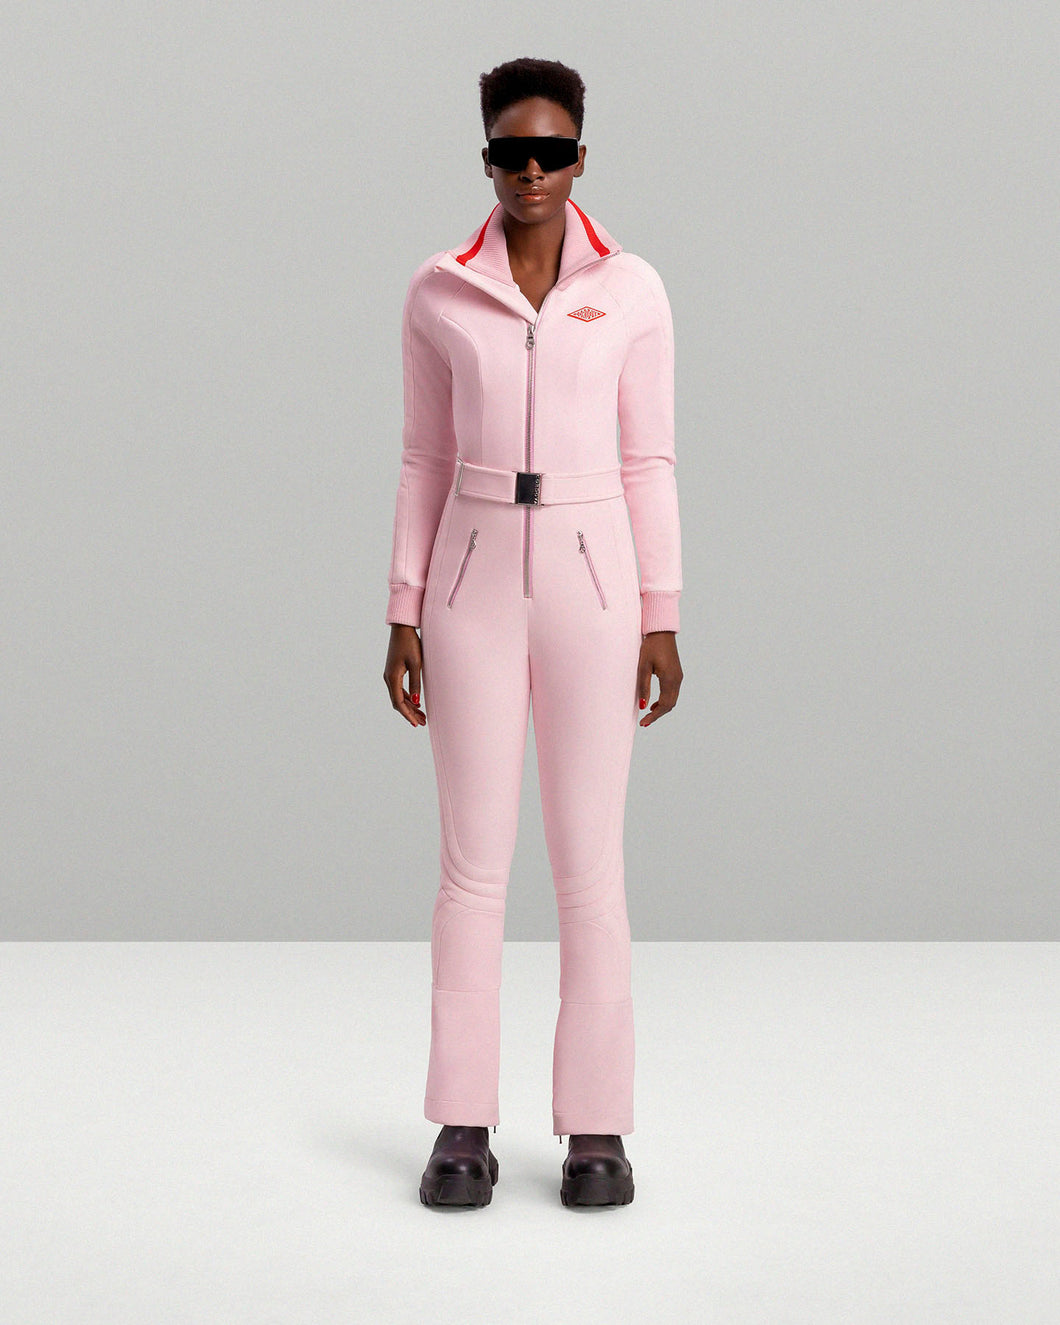 Modena Ski Suit - Digital Pink/Fiery Red